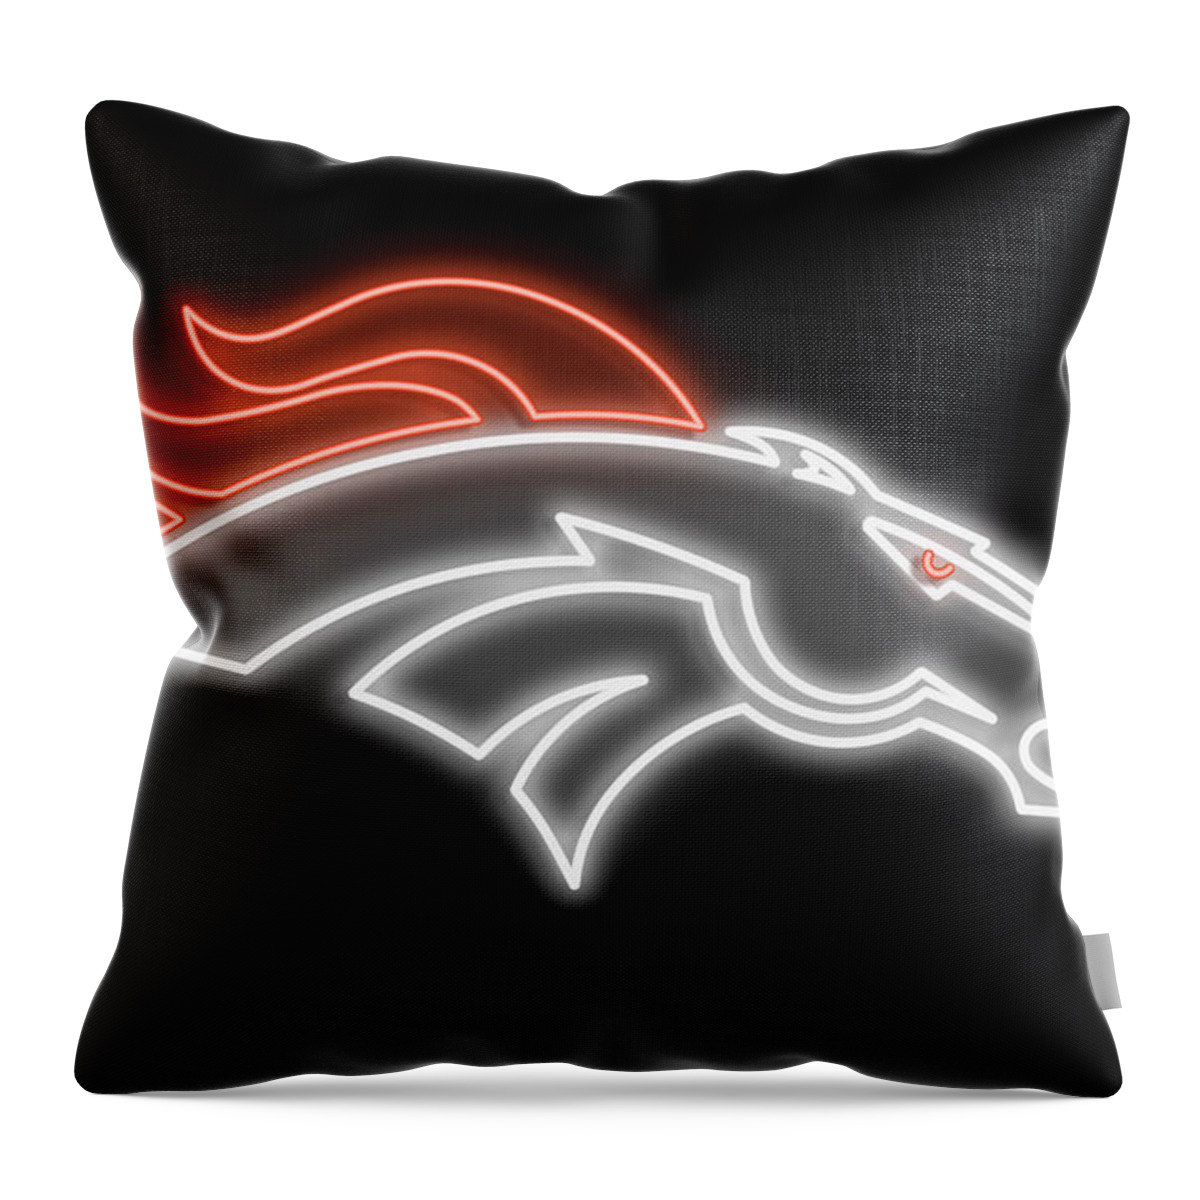 Denver Throw Pillow featuring the digital art Broncos Neon Sign by Ricky Barnard